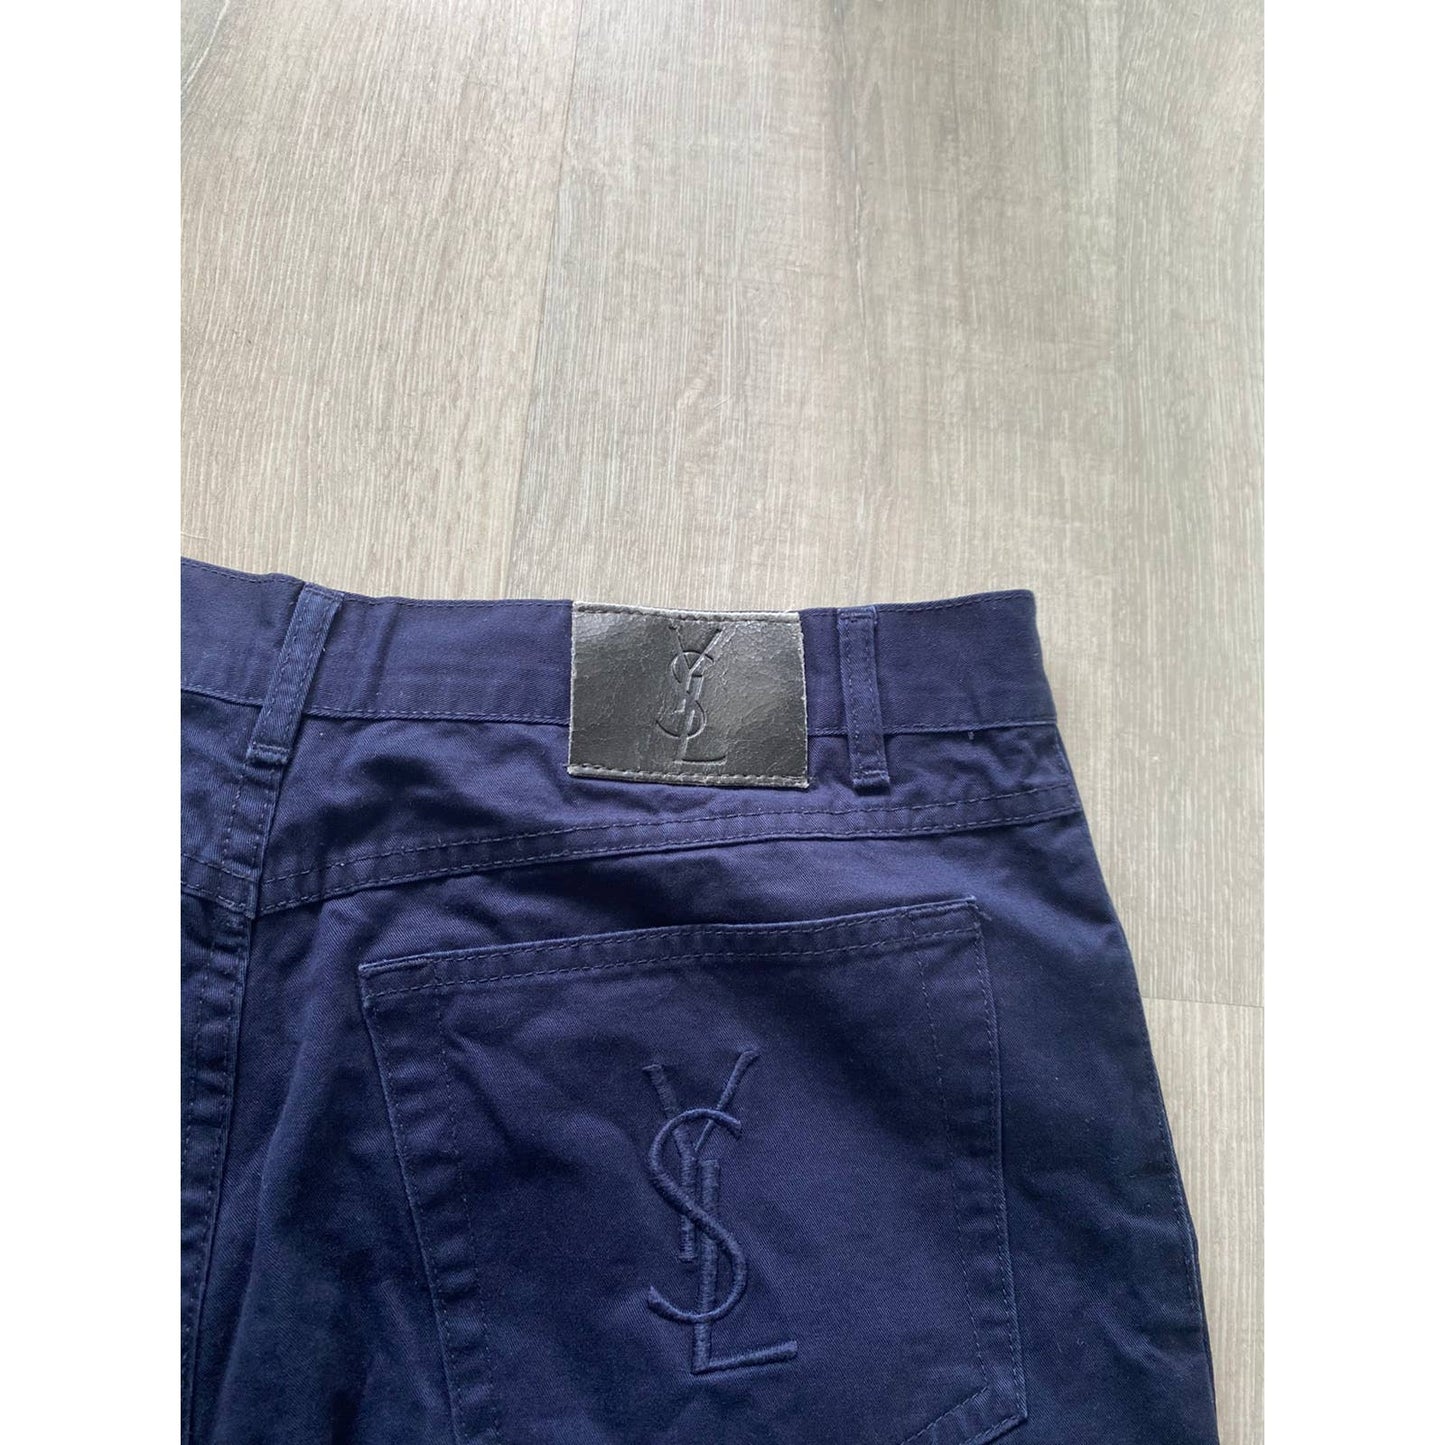 90s Yves Saint Laurent vintage navy chino pants YSL big logo